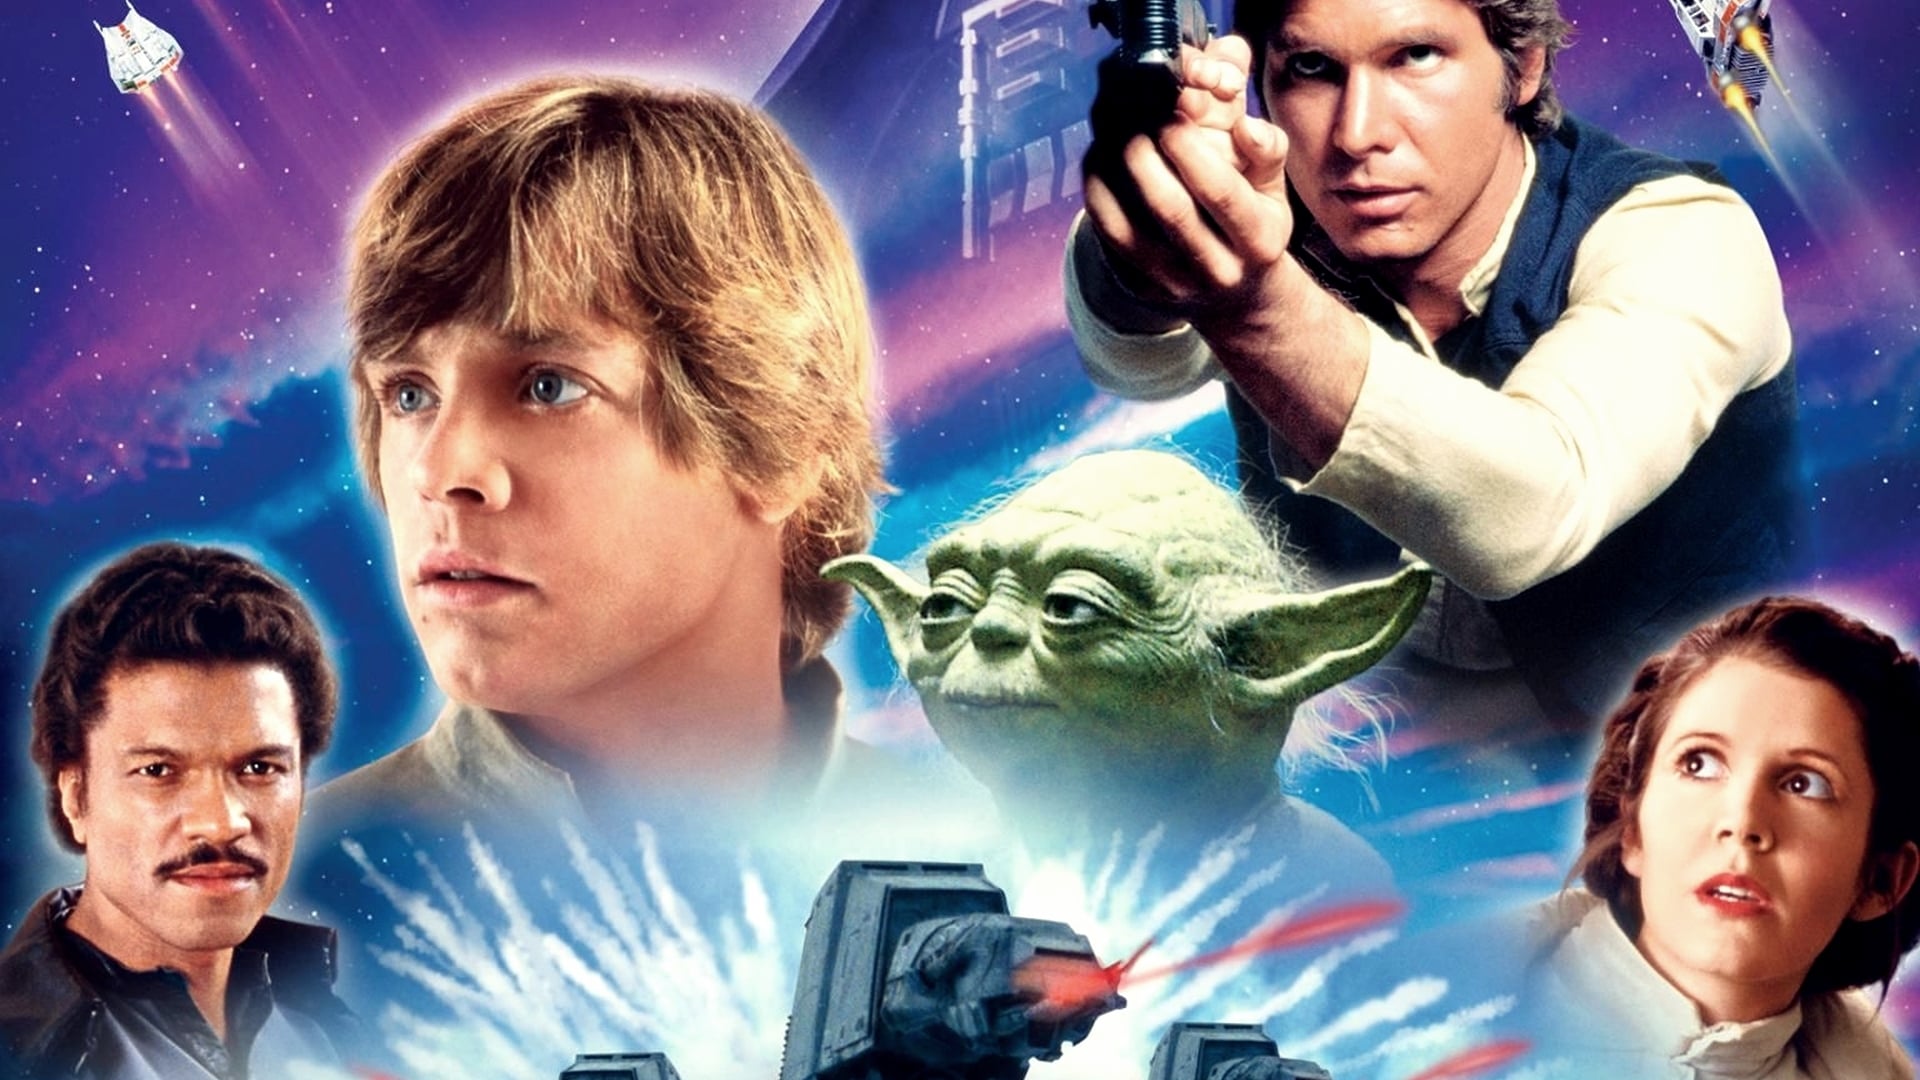 Image du film Star Wars Episode V : l'Empire contre-attaque bavc84sw0hgkbpdmqjpoybdgdcgjpg